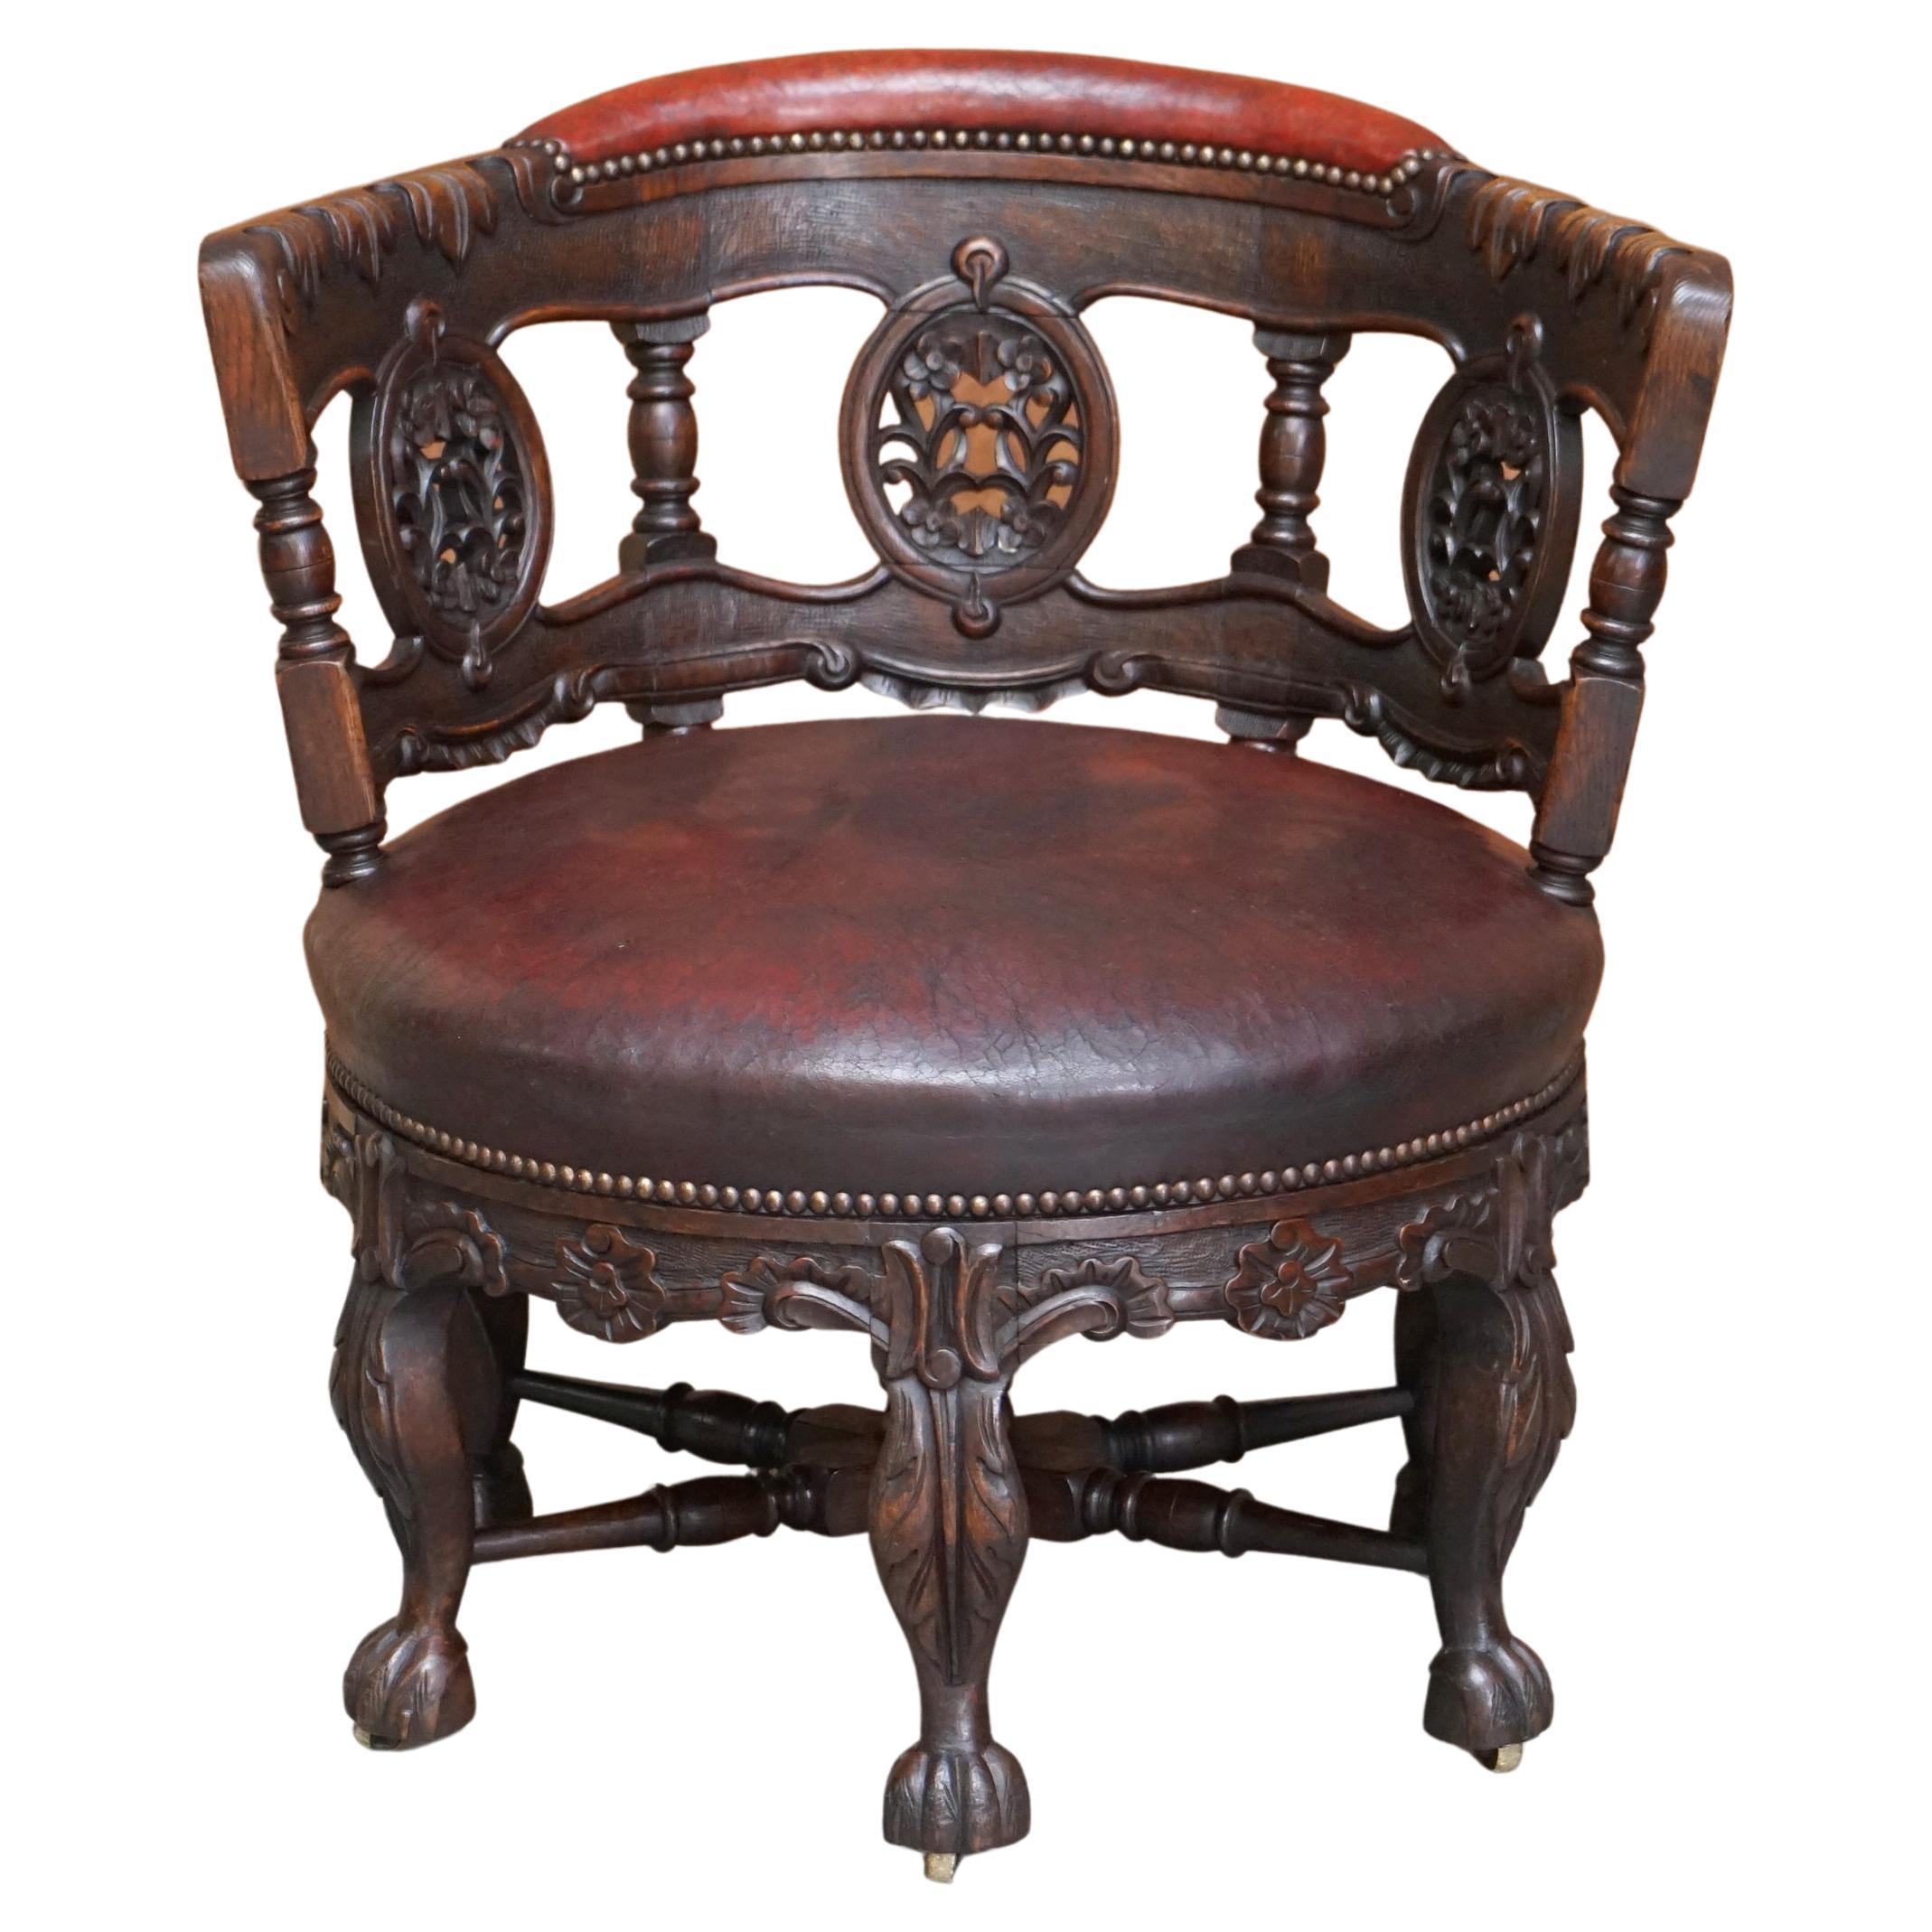 Antiker geschnitzter viktorianischer Burgermeister-Stuhl aus Ochsenblutleder, 17. Jahrhundert, Design